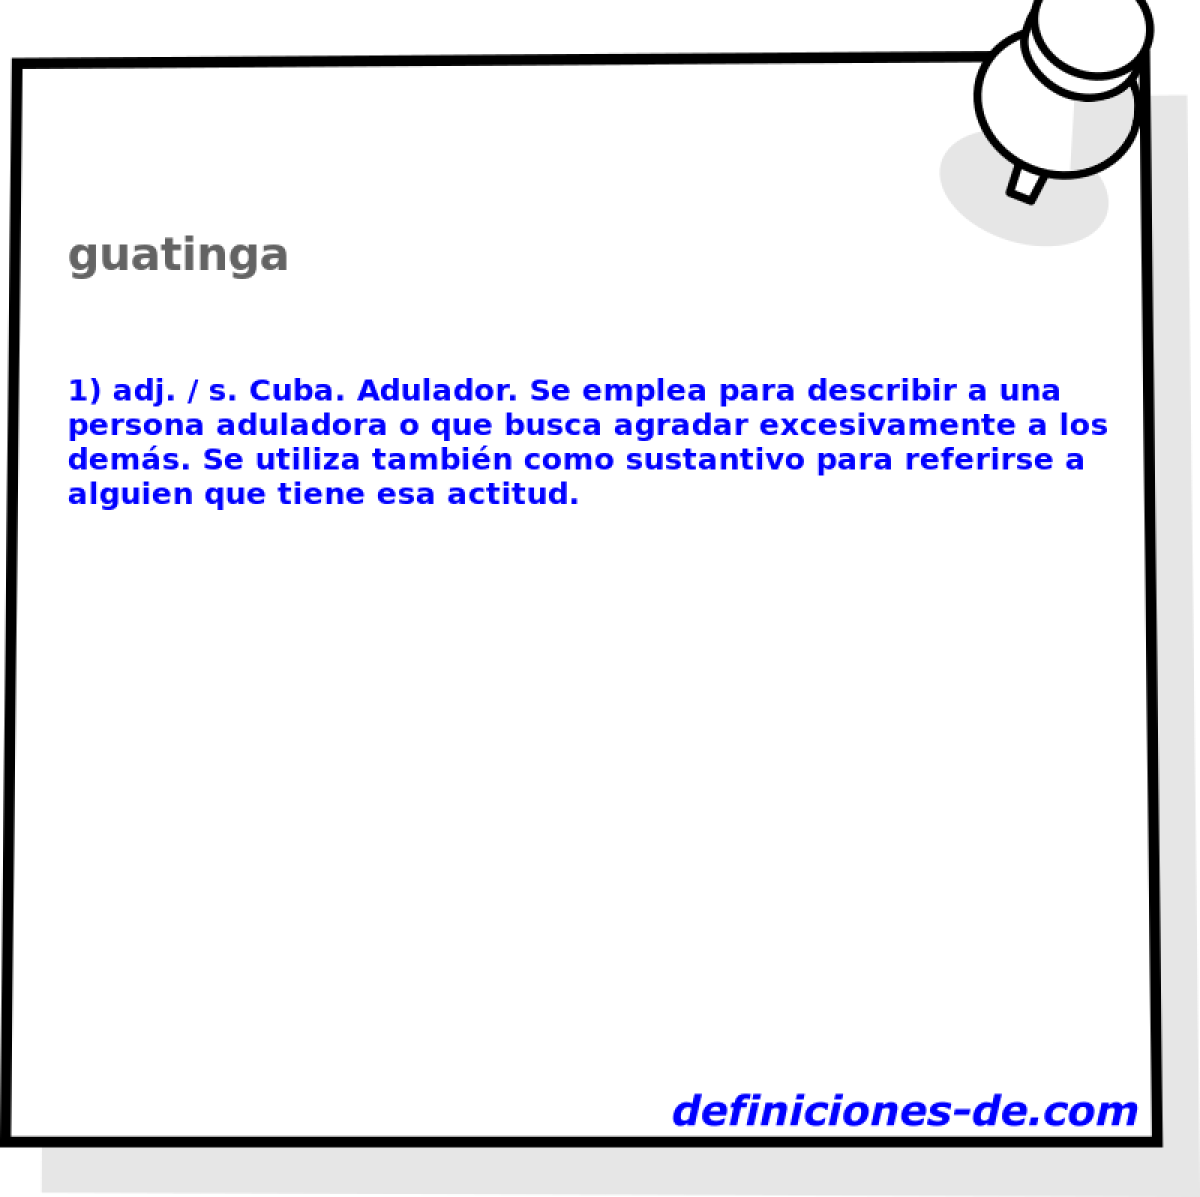 guatinga 